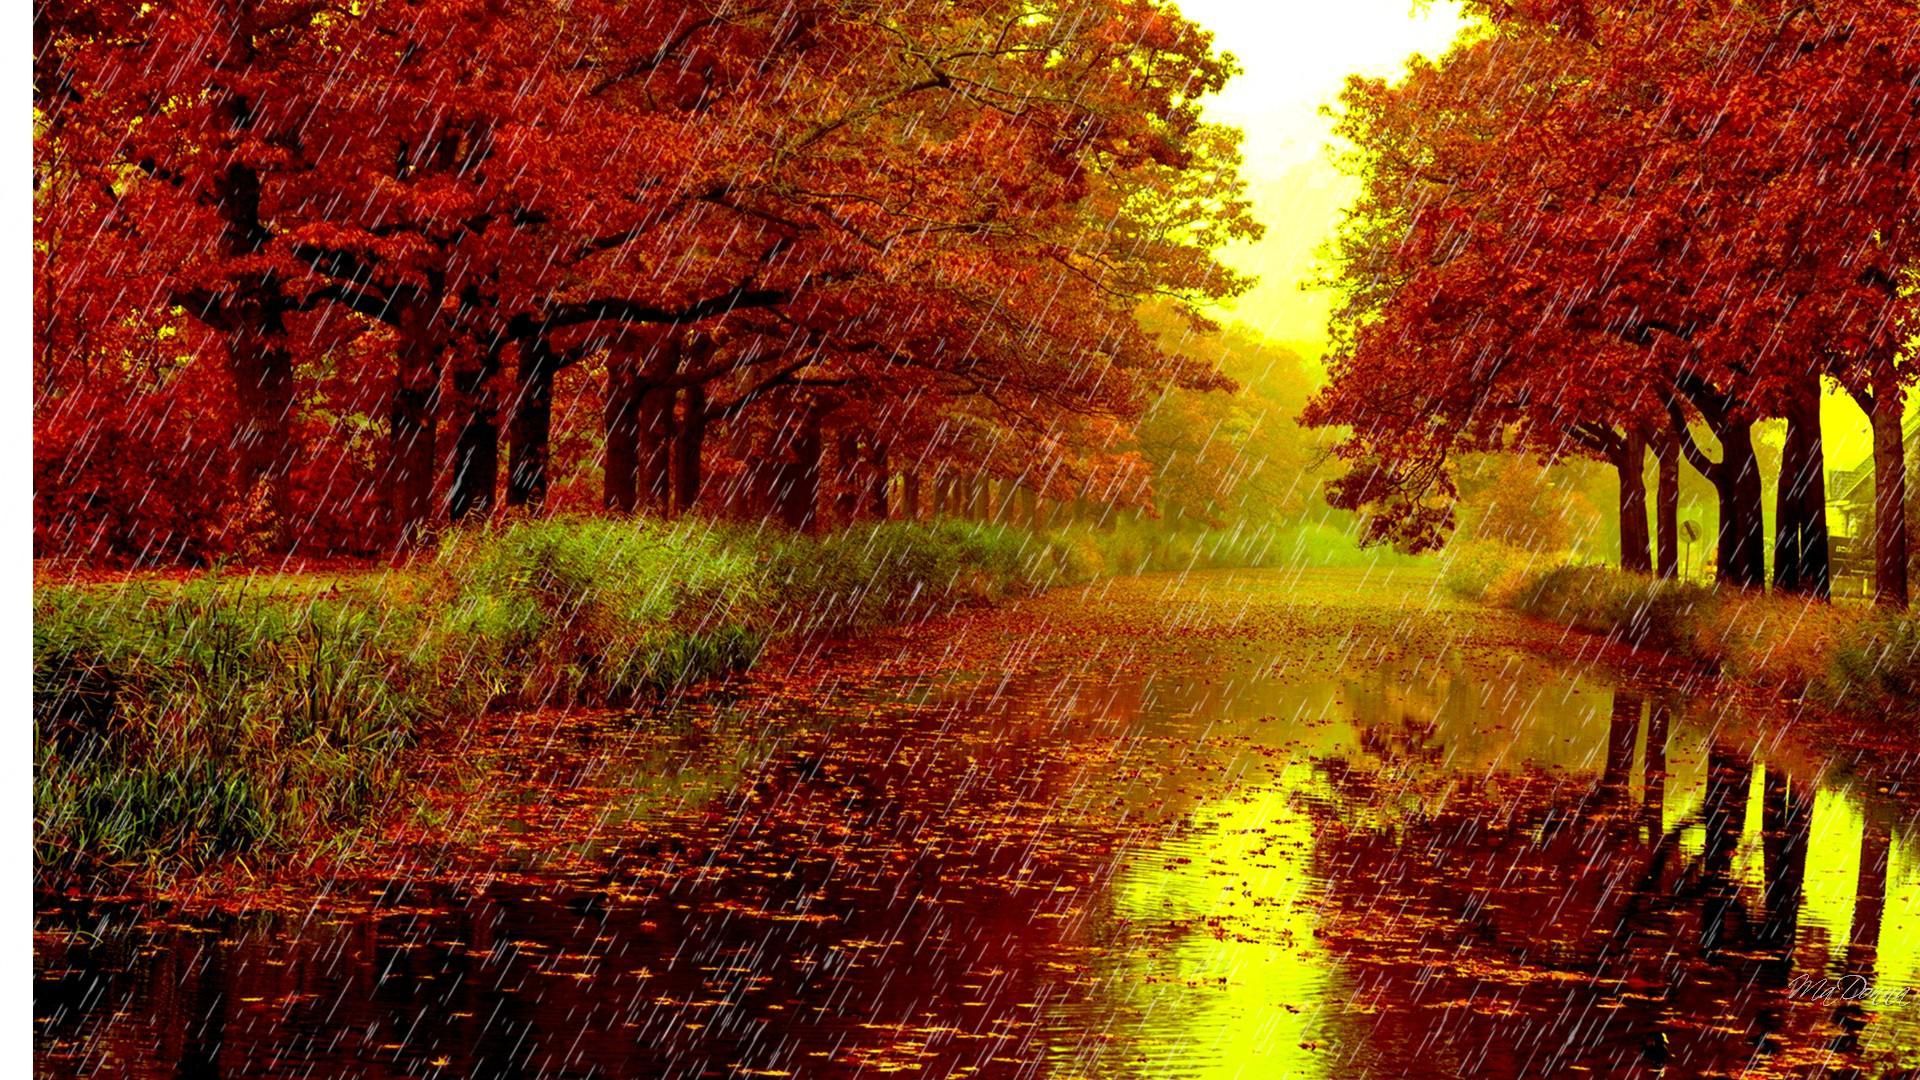 Rainy day in the autumn season free wallpaper. Autumn season image, Fall wallpaper, Autumn rain